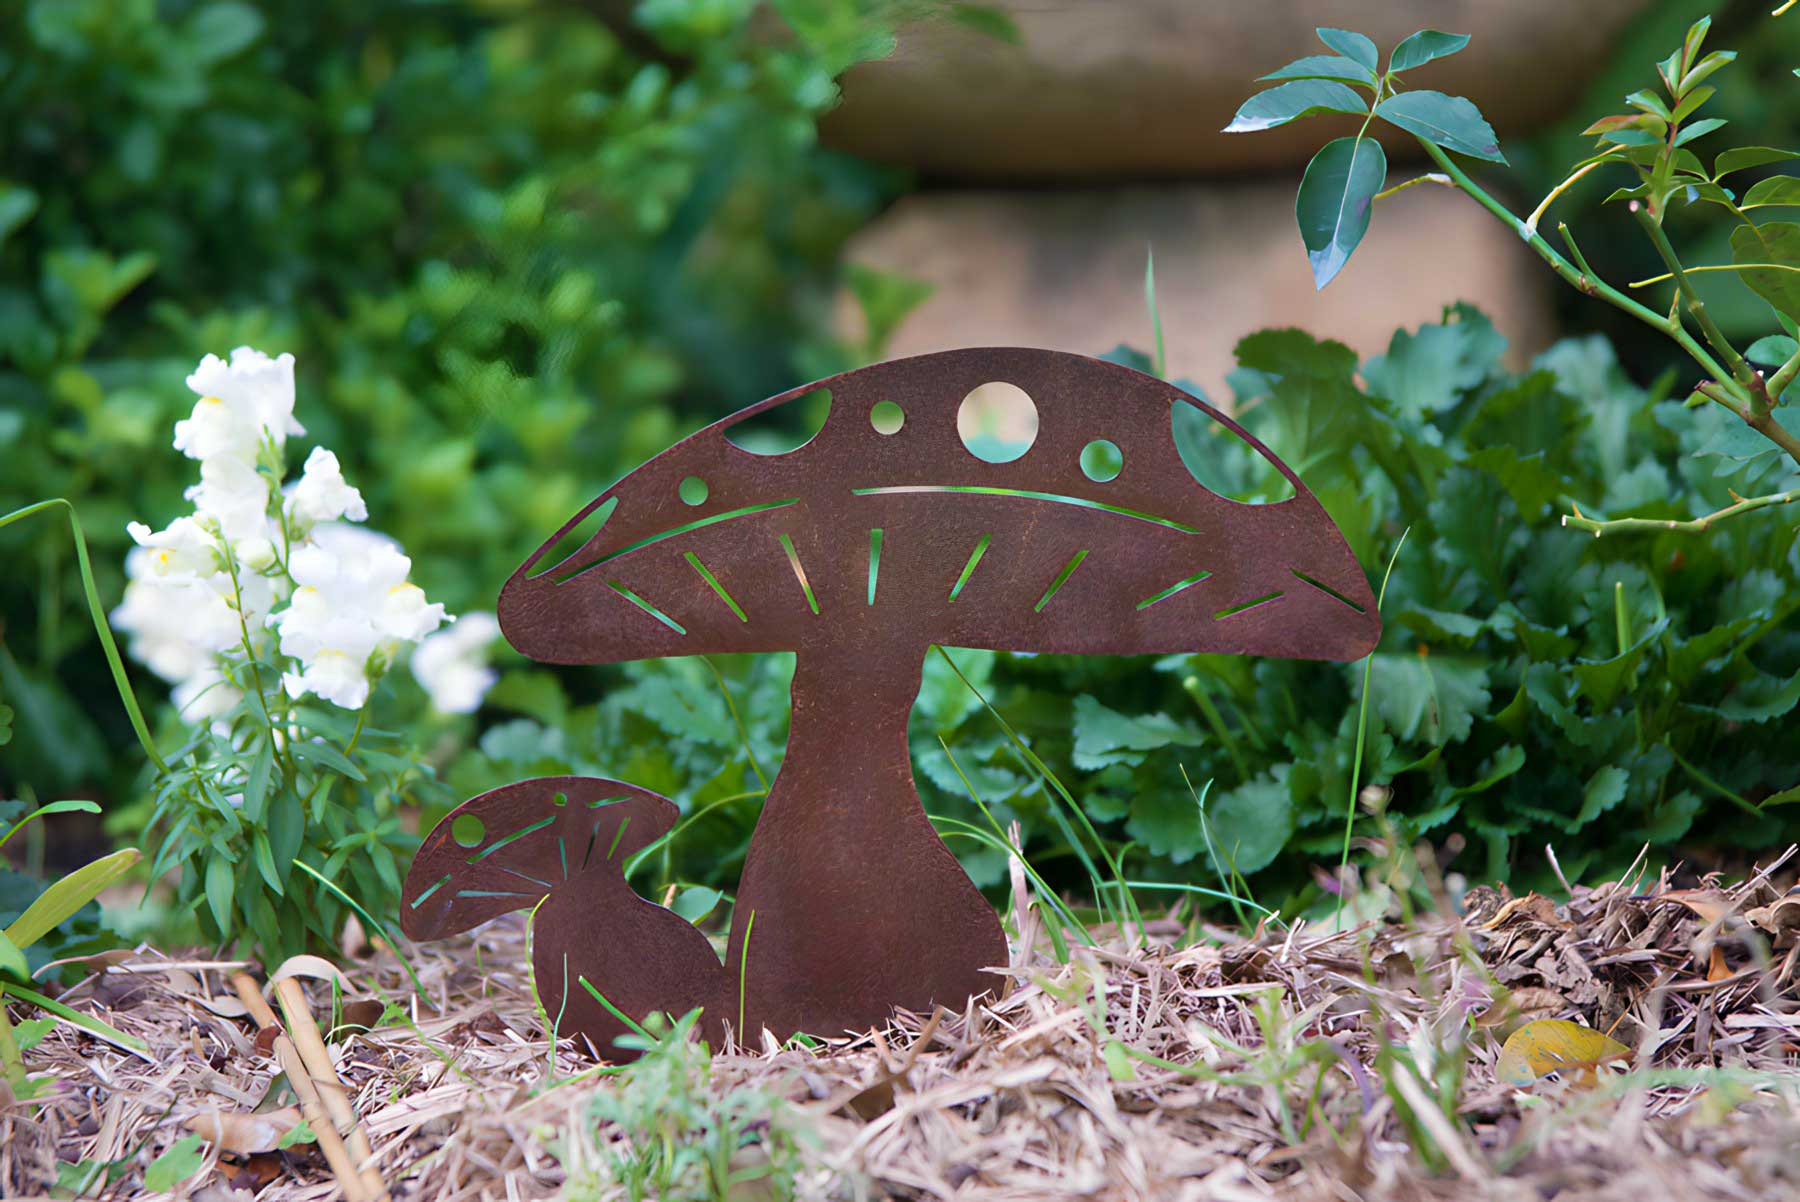 Garden art - Mushrooms make a great addition to your garden